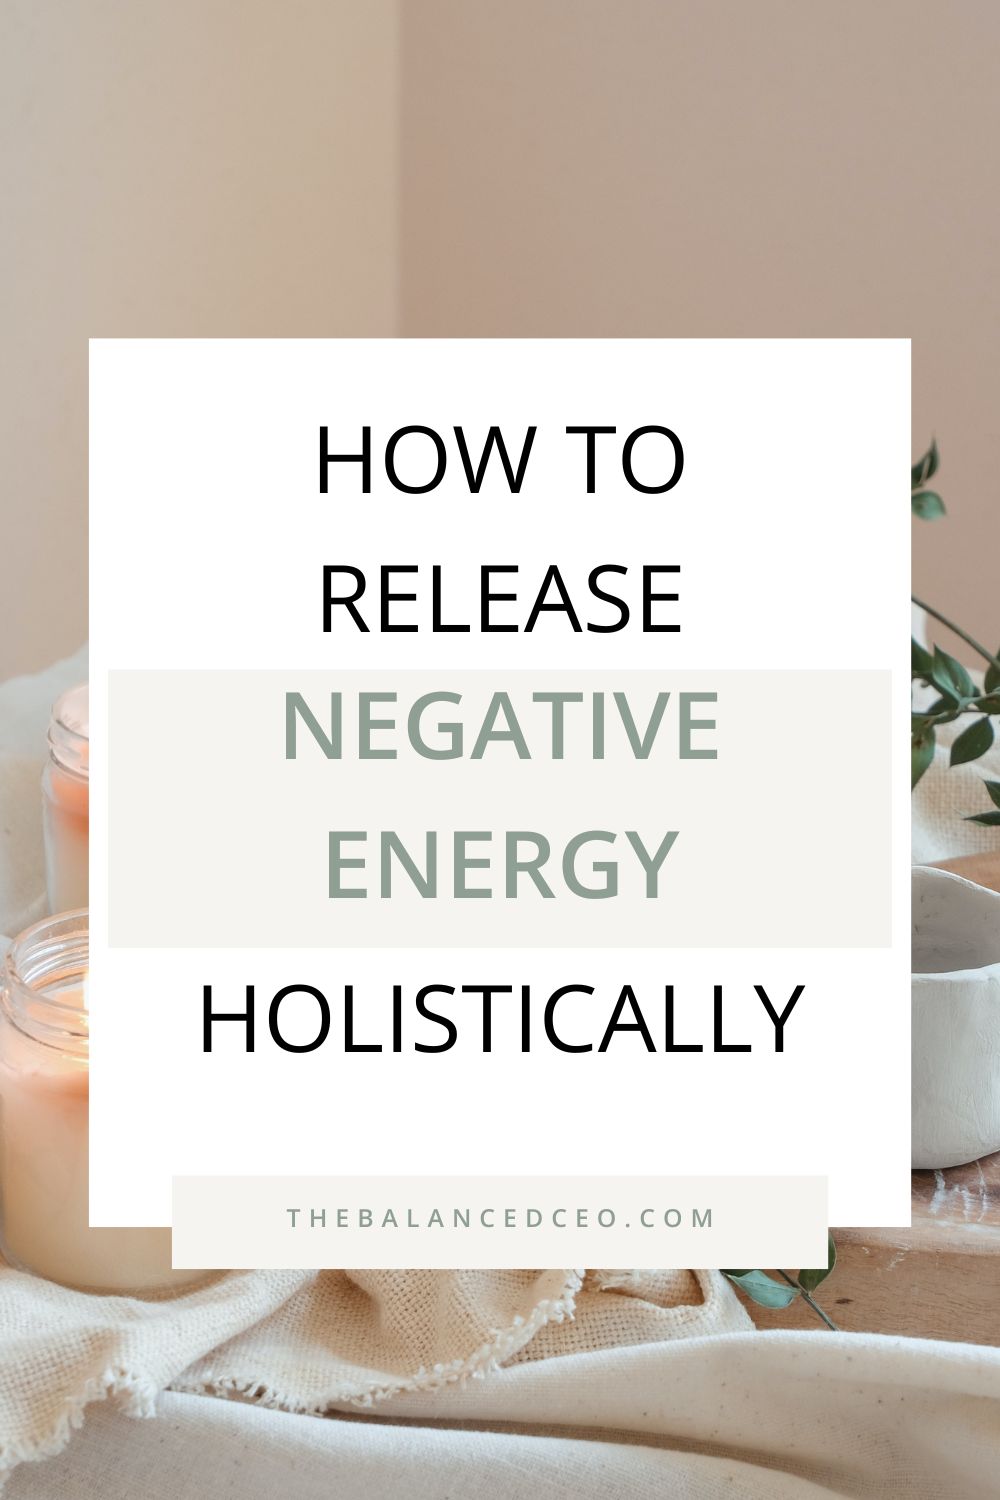 How to Release Negative Energy Holistically